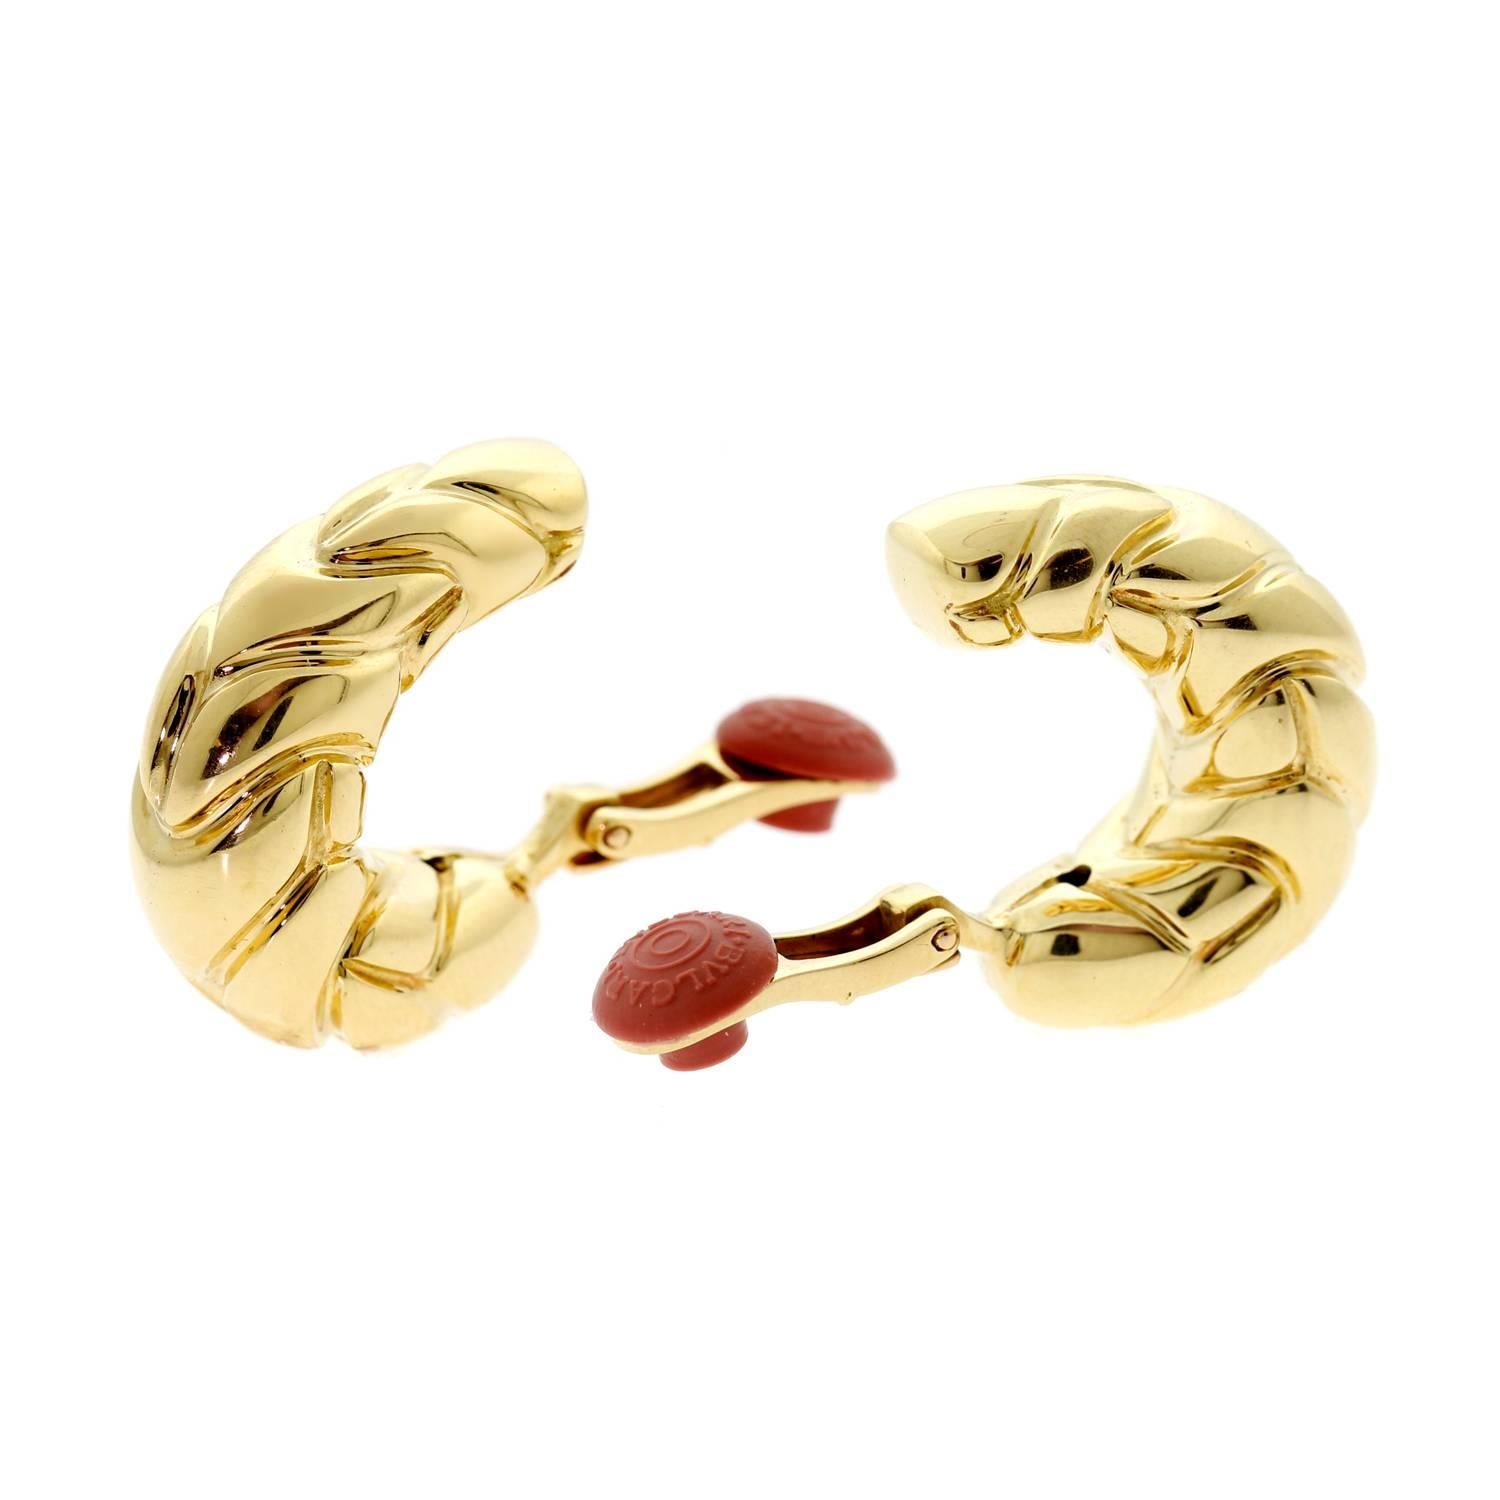 A fabulous pair of authentic Bulgari half hoop 18k yellow gold earrings. 

1.10